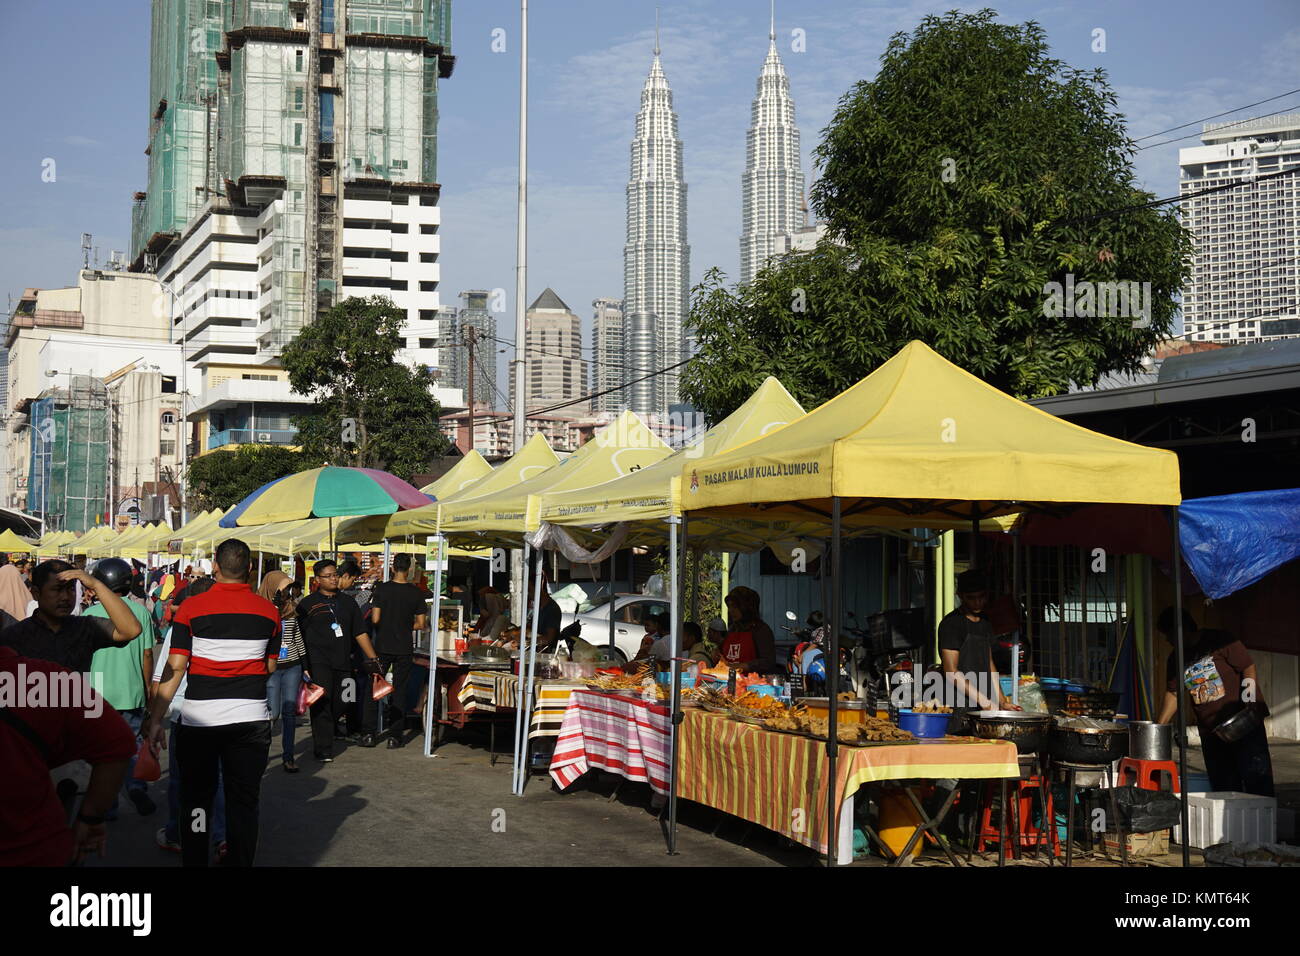 Ramadan food bazaar à Kampung Baru, Kuala Lumpur, Malaisie Banque D'Images